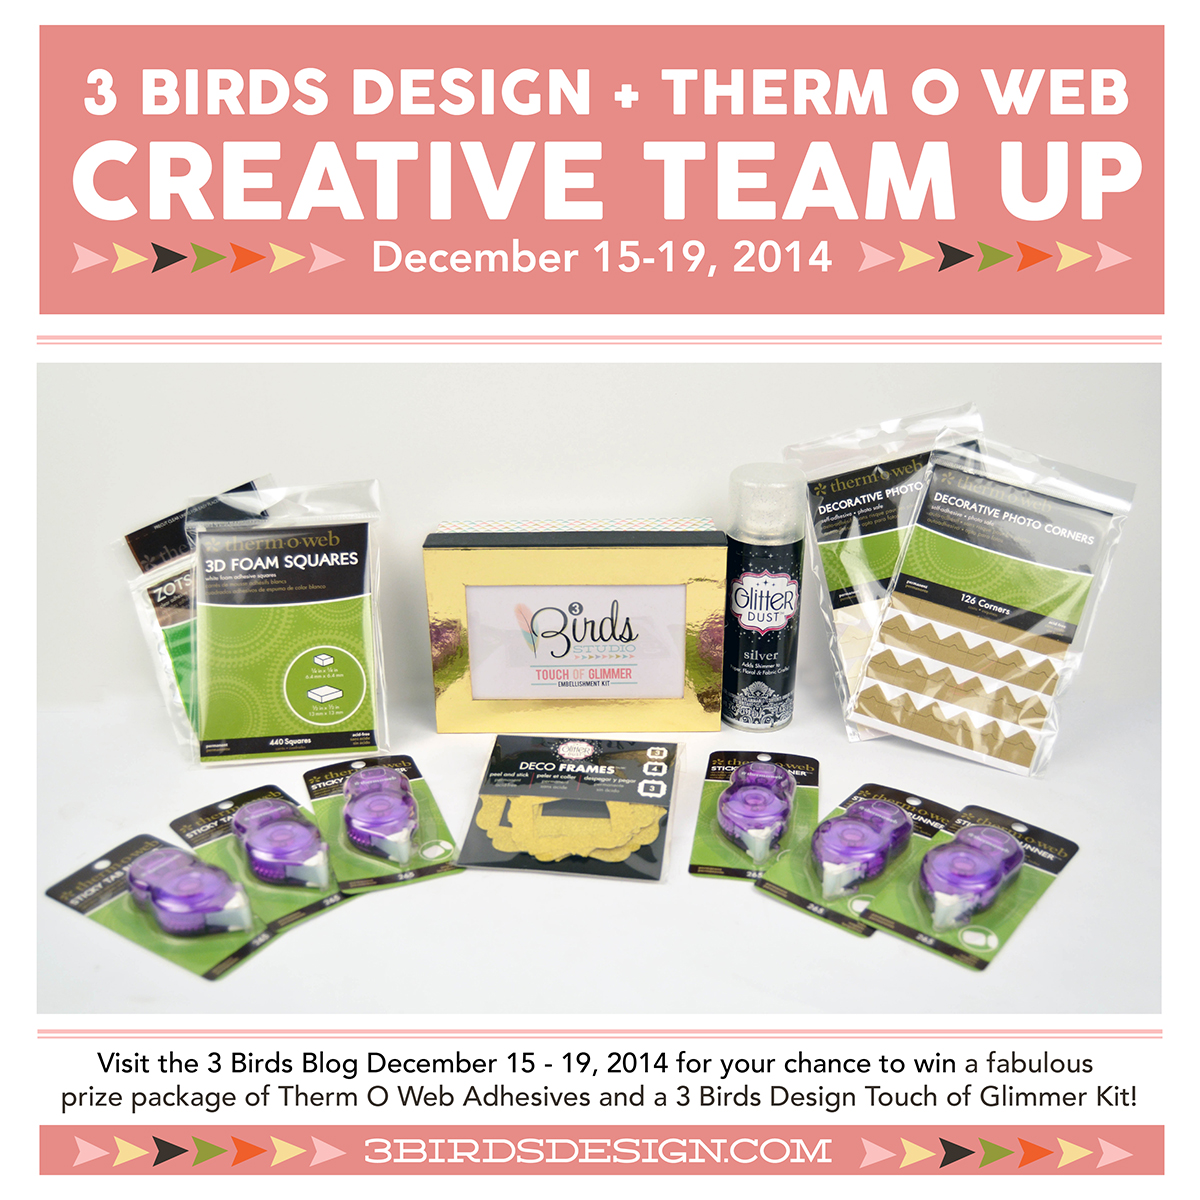 3 Birds Design and Therm O Web Creative Team Up